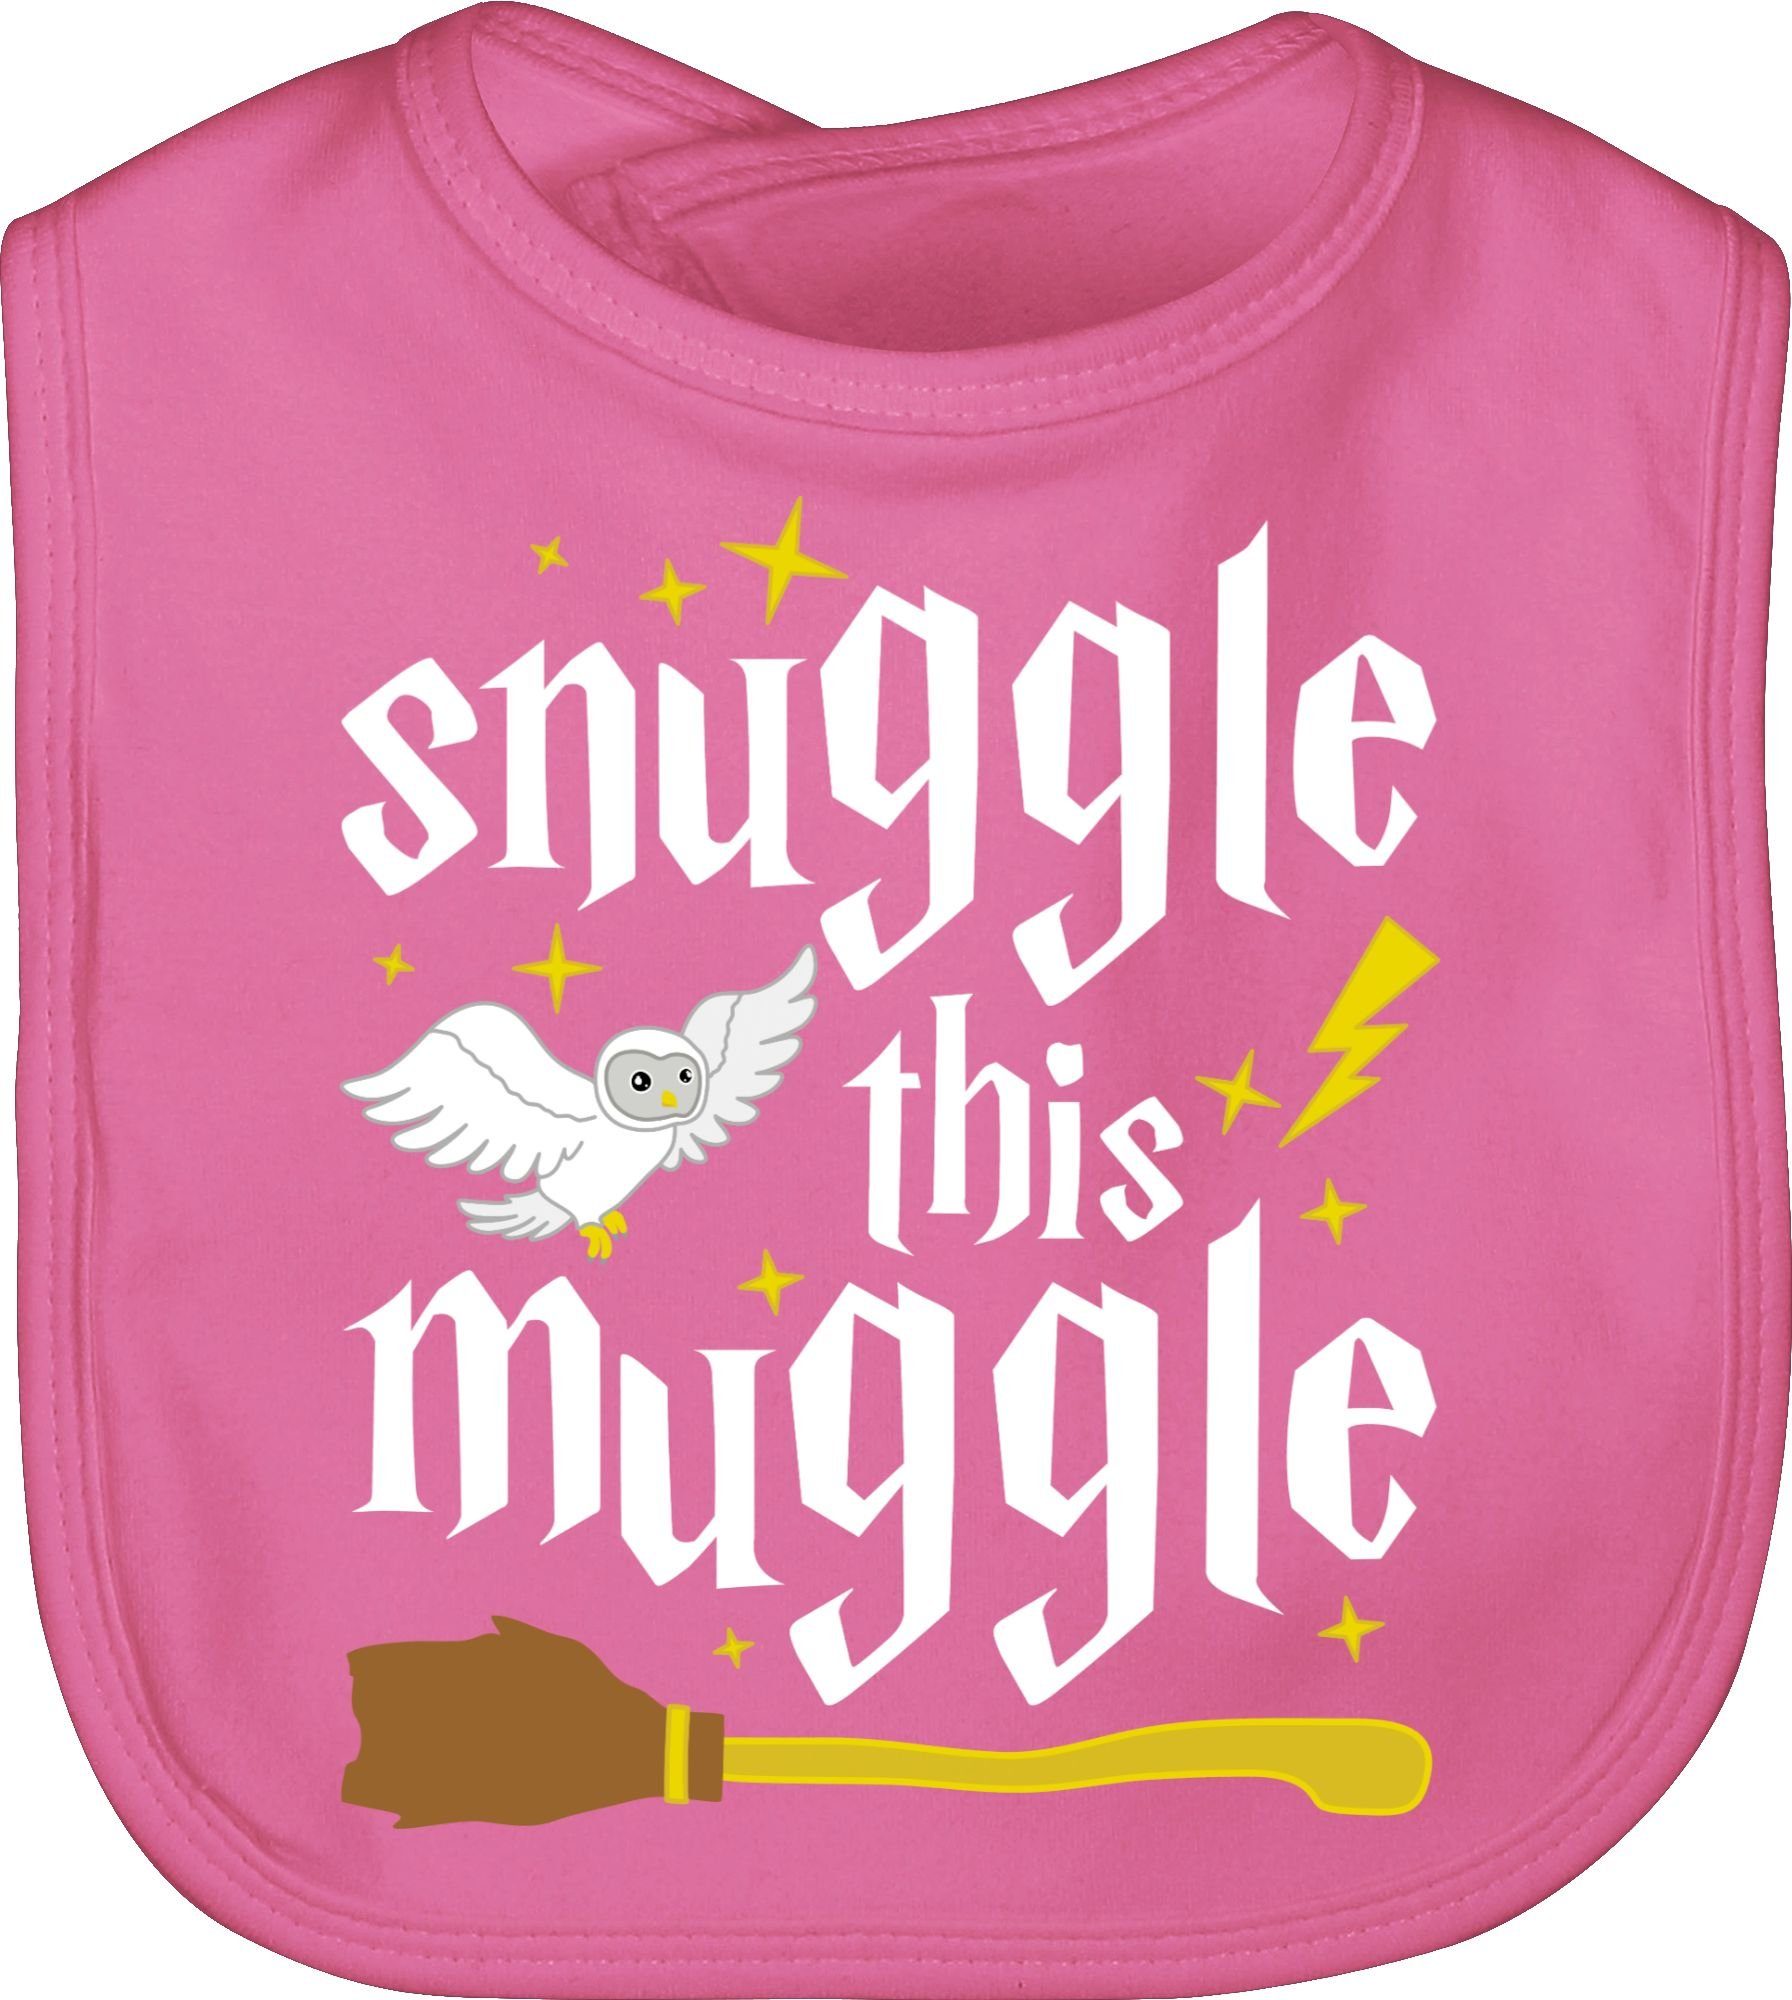 & Baby Harry, Snuggle Mädchen Muggle Junge This Pink Lätzchen Strampler 3 Shirtracer